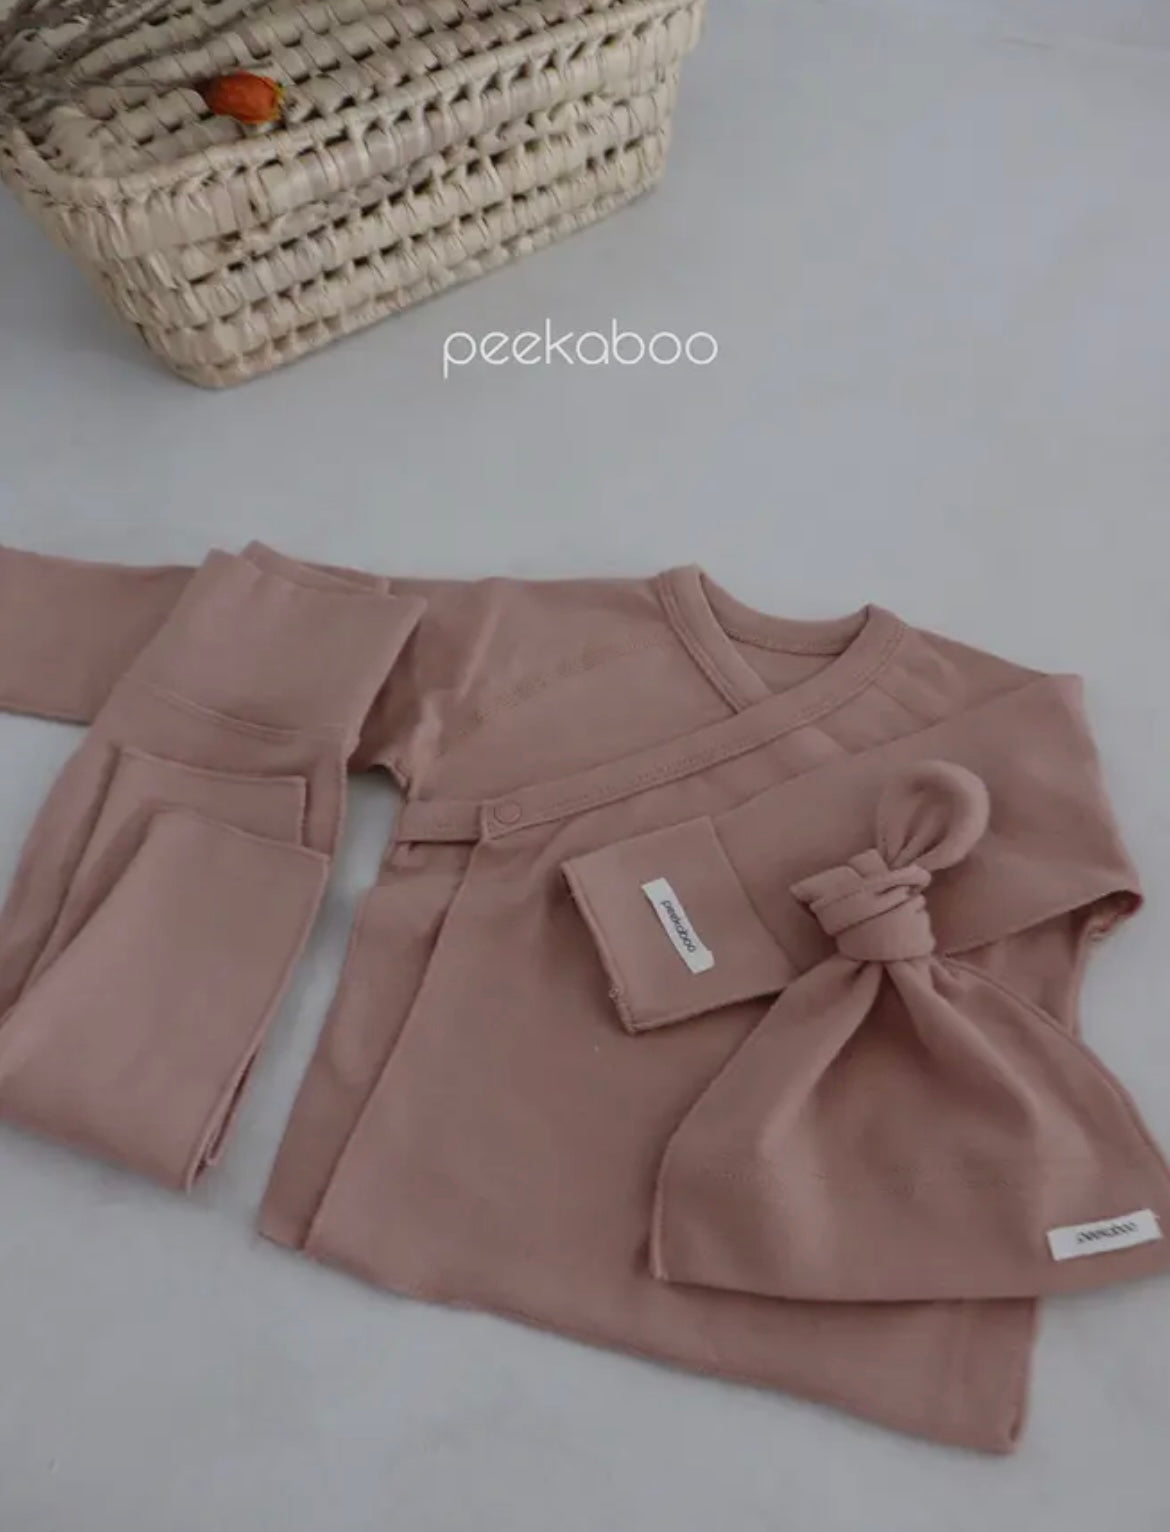 Peekaboo kimono set-pink